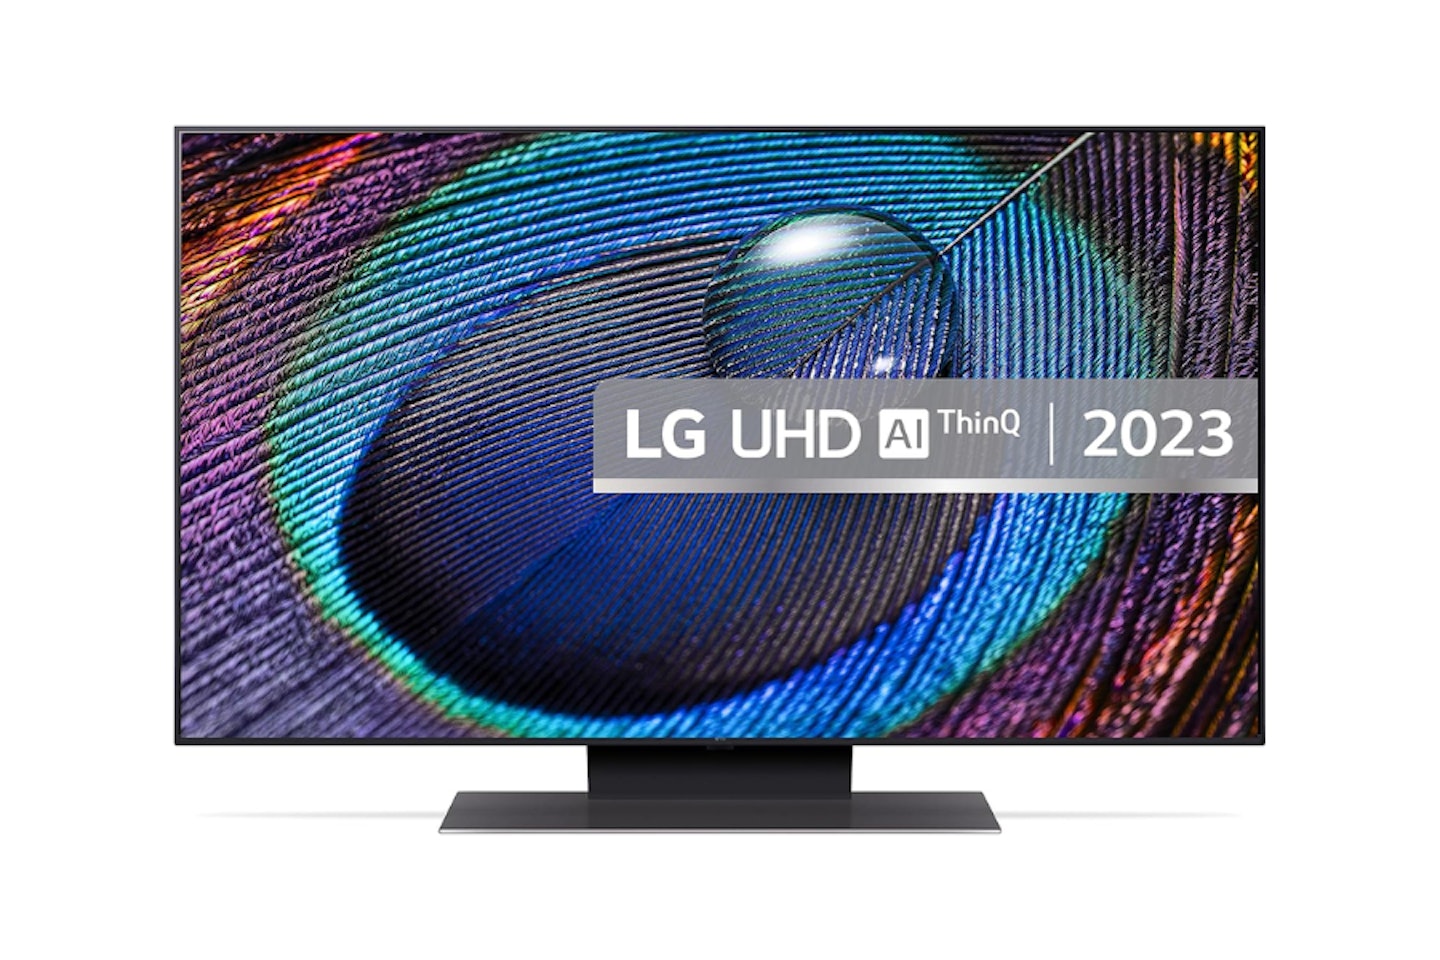 LG LED UR91 43-inch 4K Smart TV, 2023